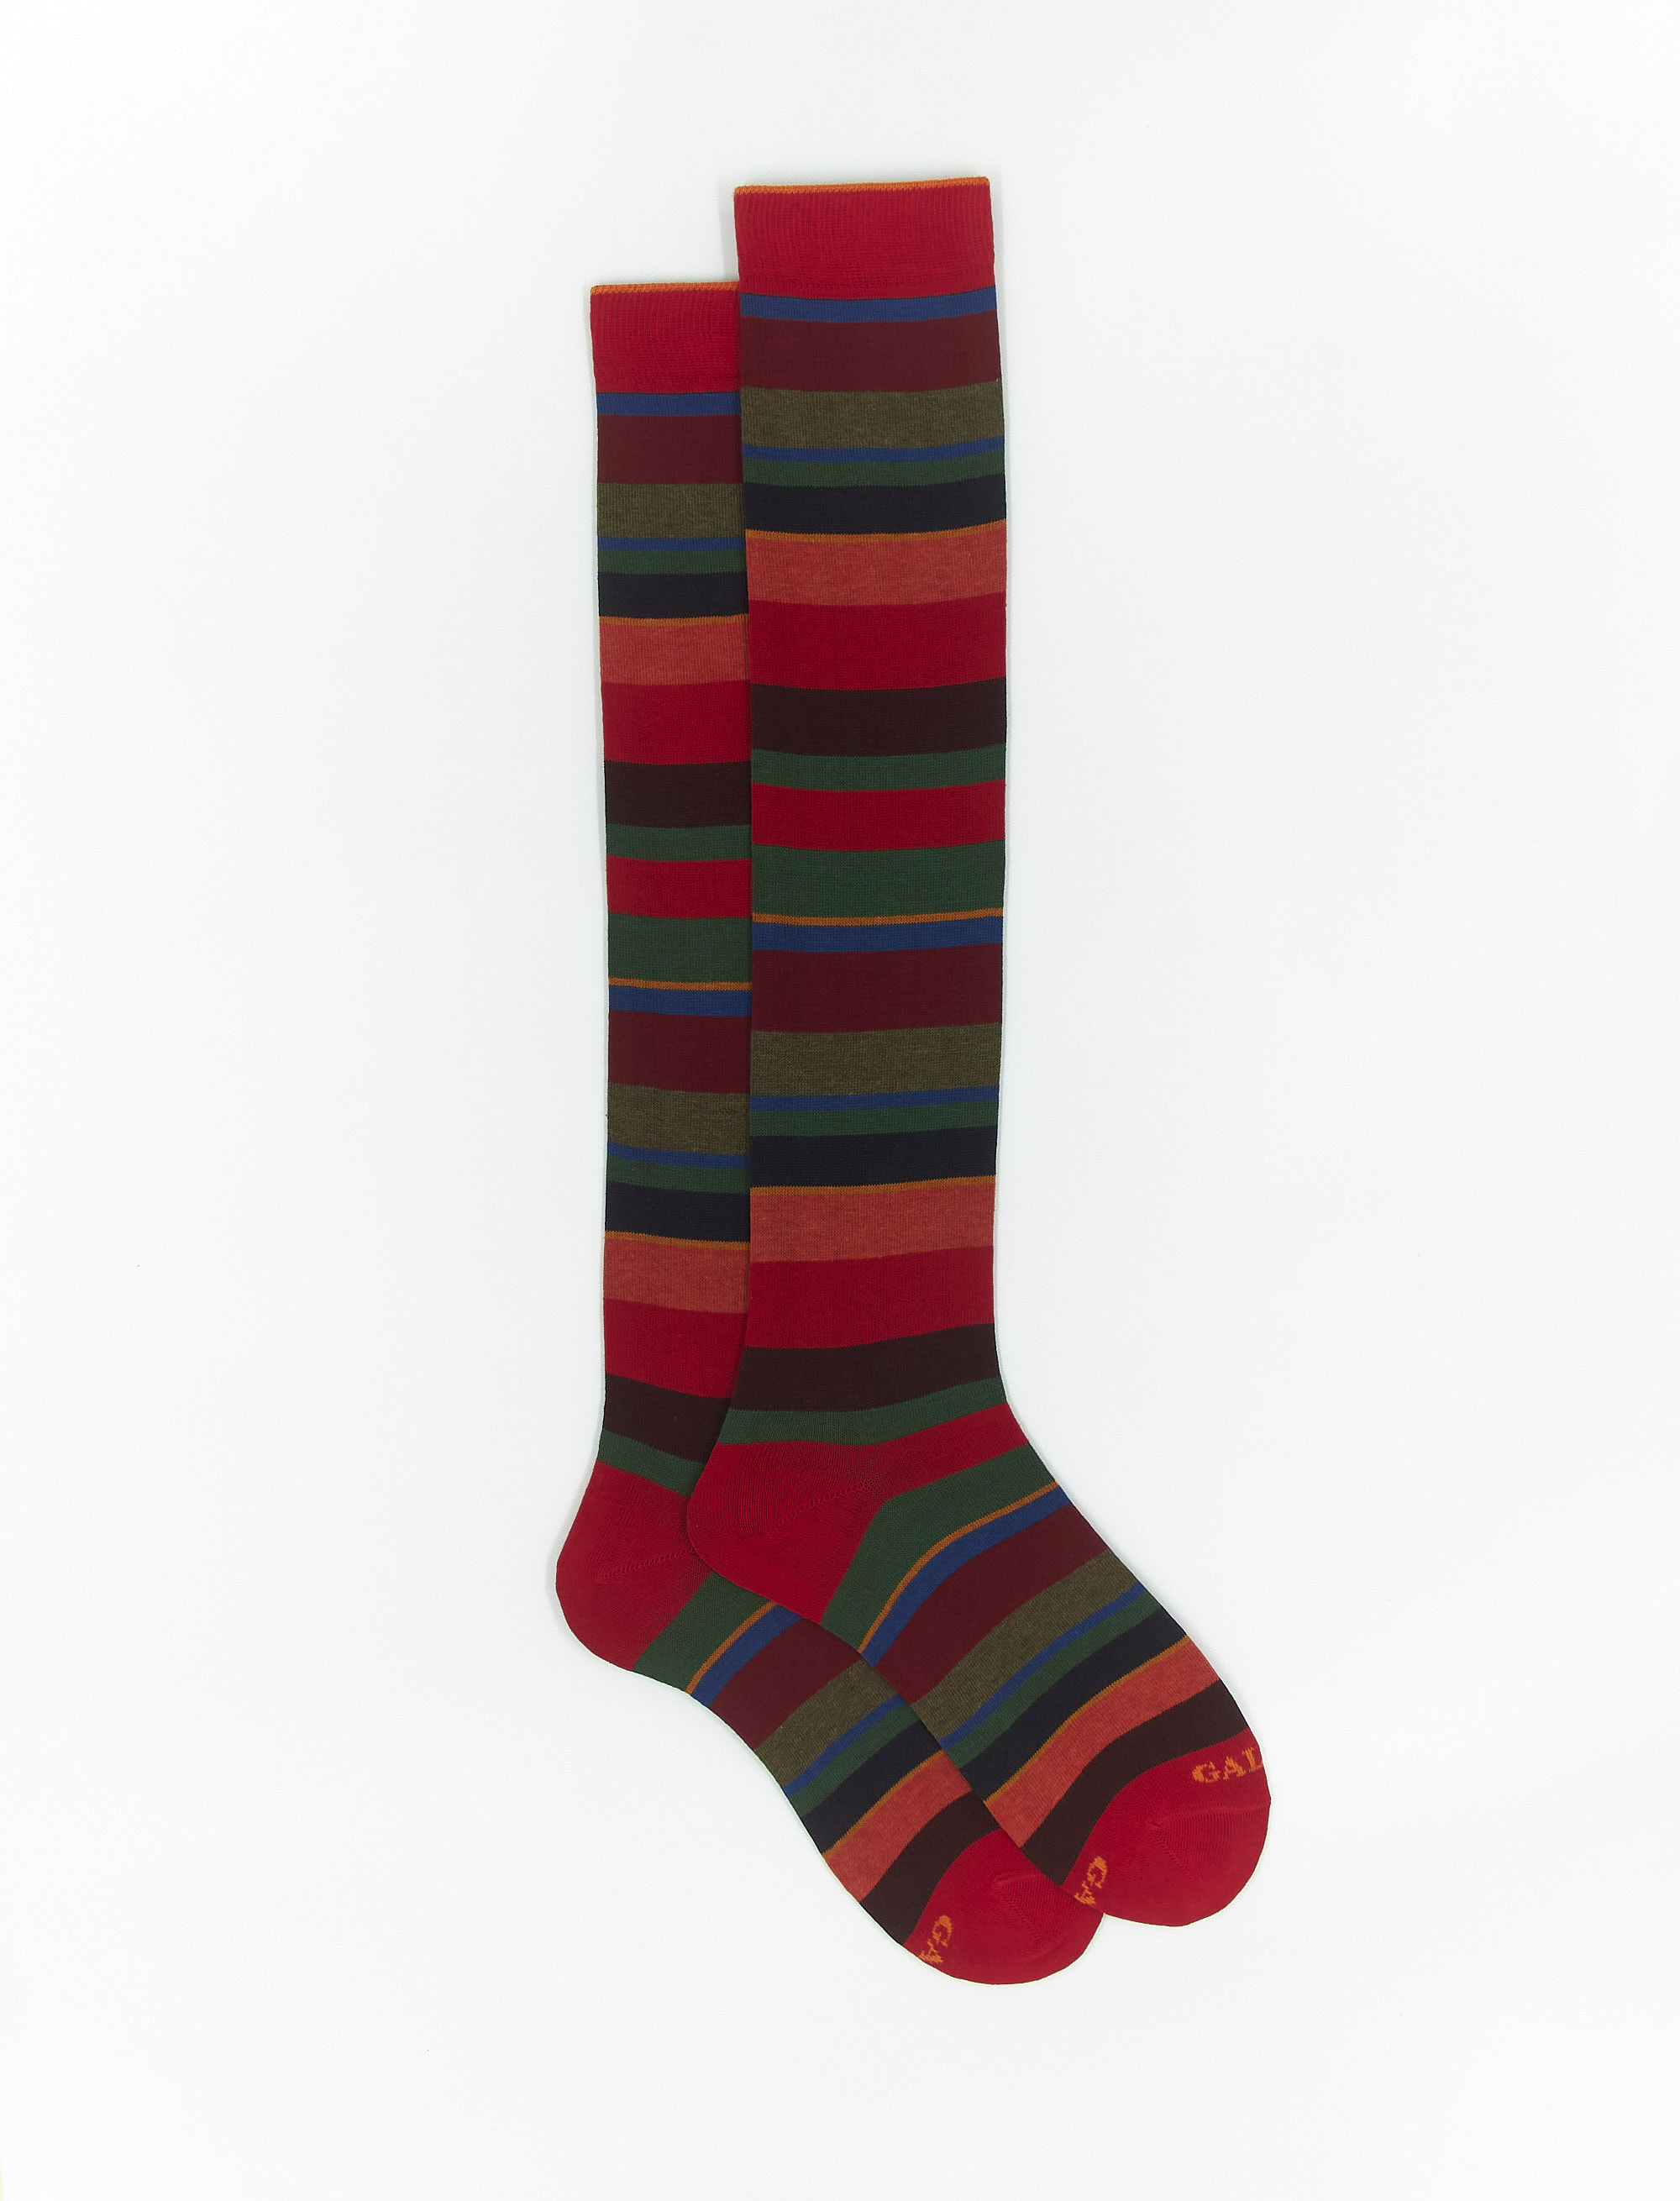 Women's striped socks in color | Multicolor socks | Gallo 1927